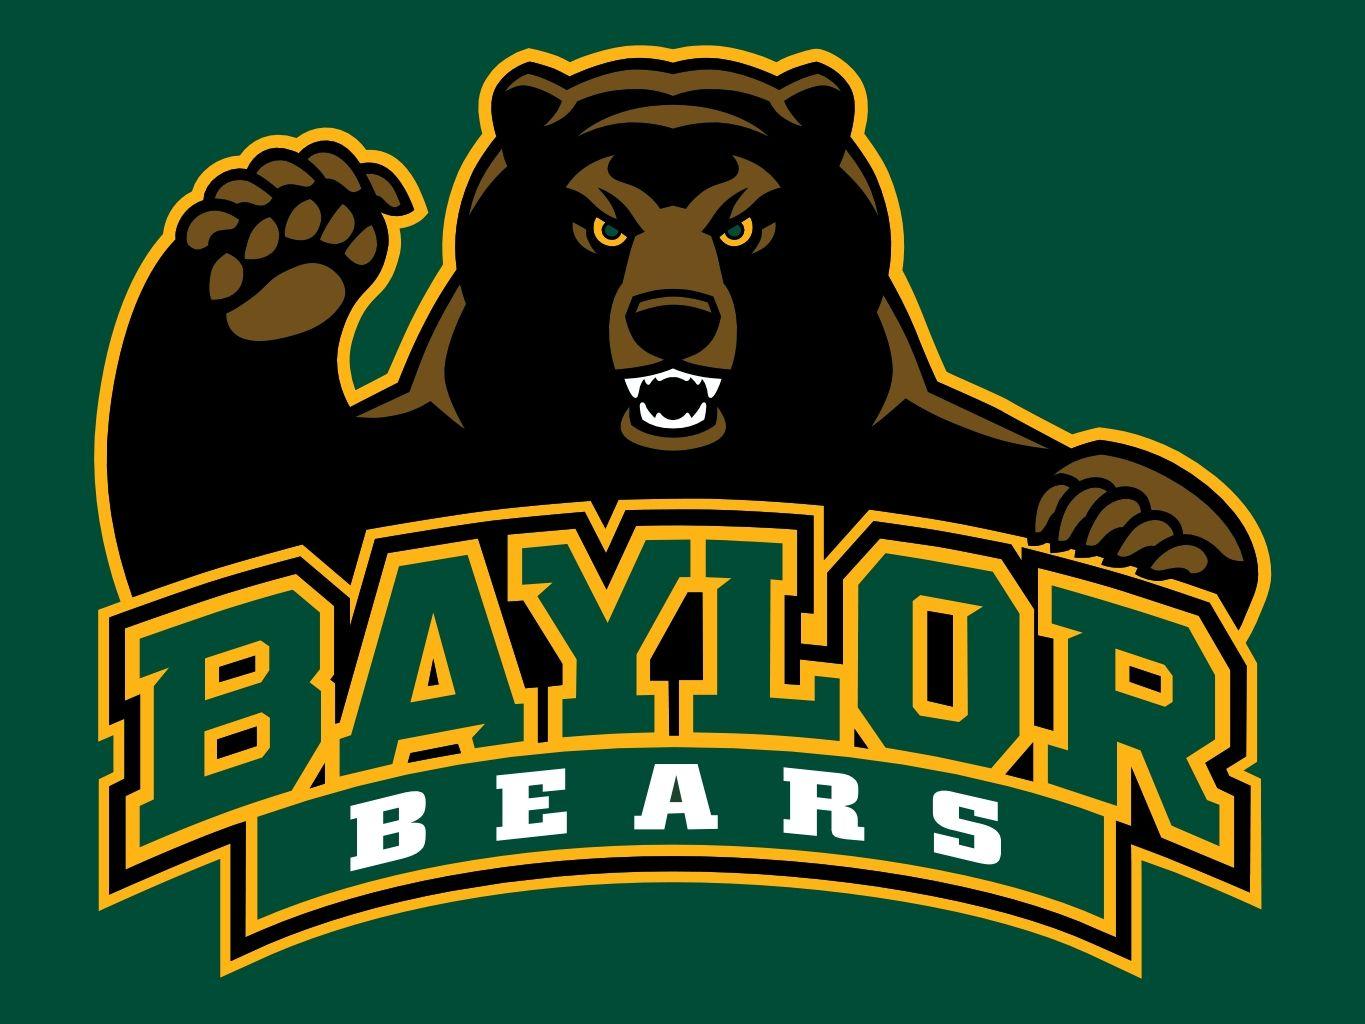 Baylor Bears Logo - Baylor Bears logo - Pypeline